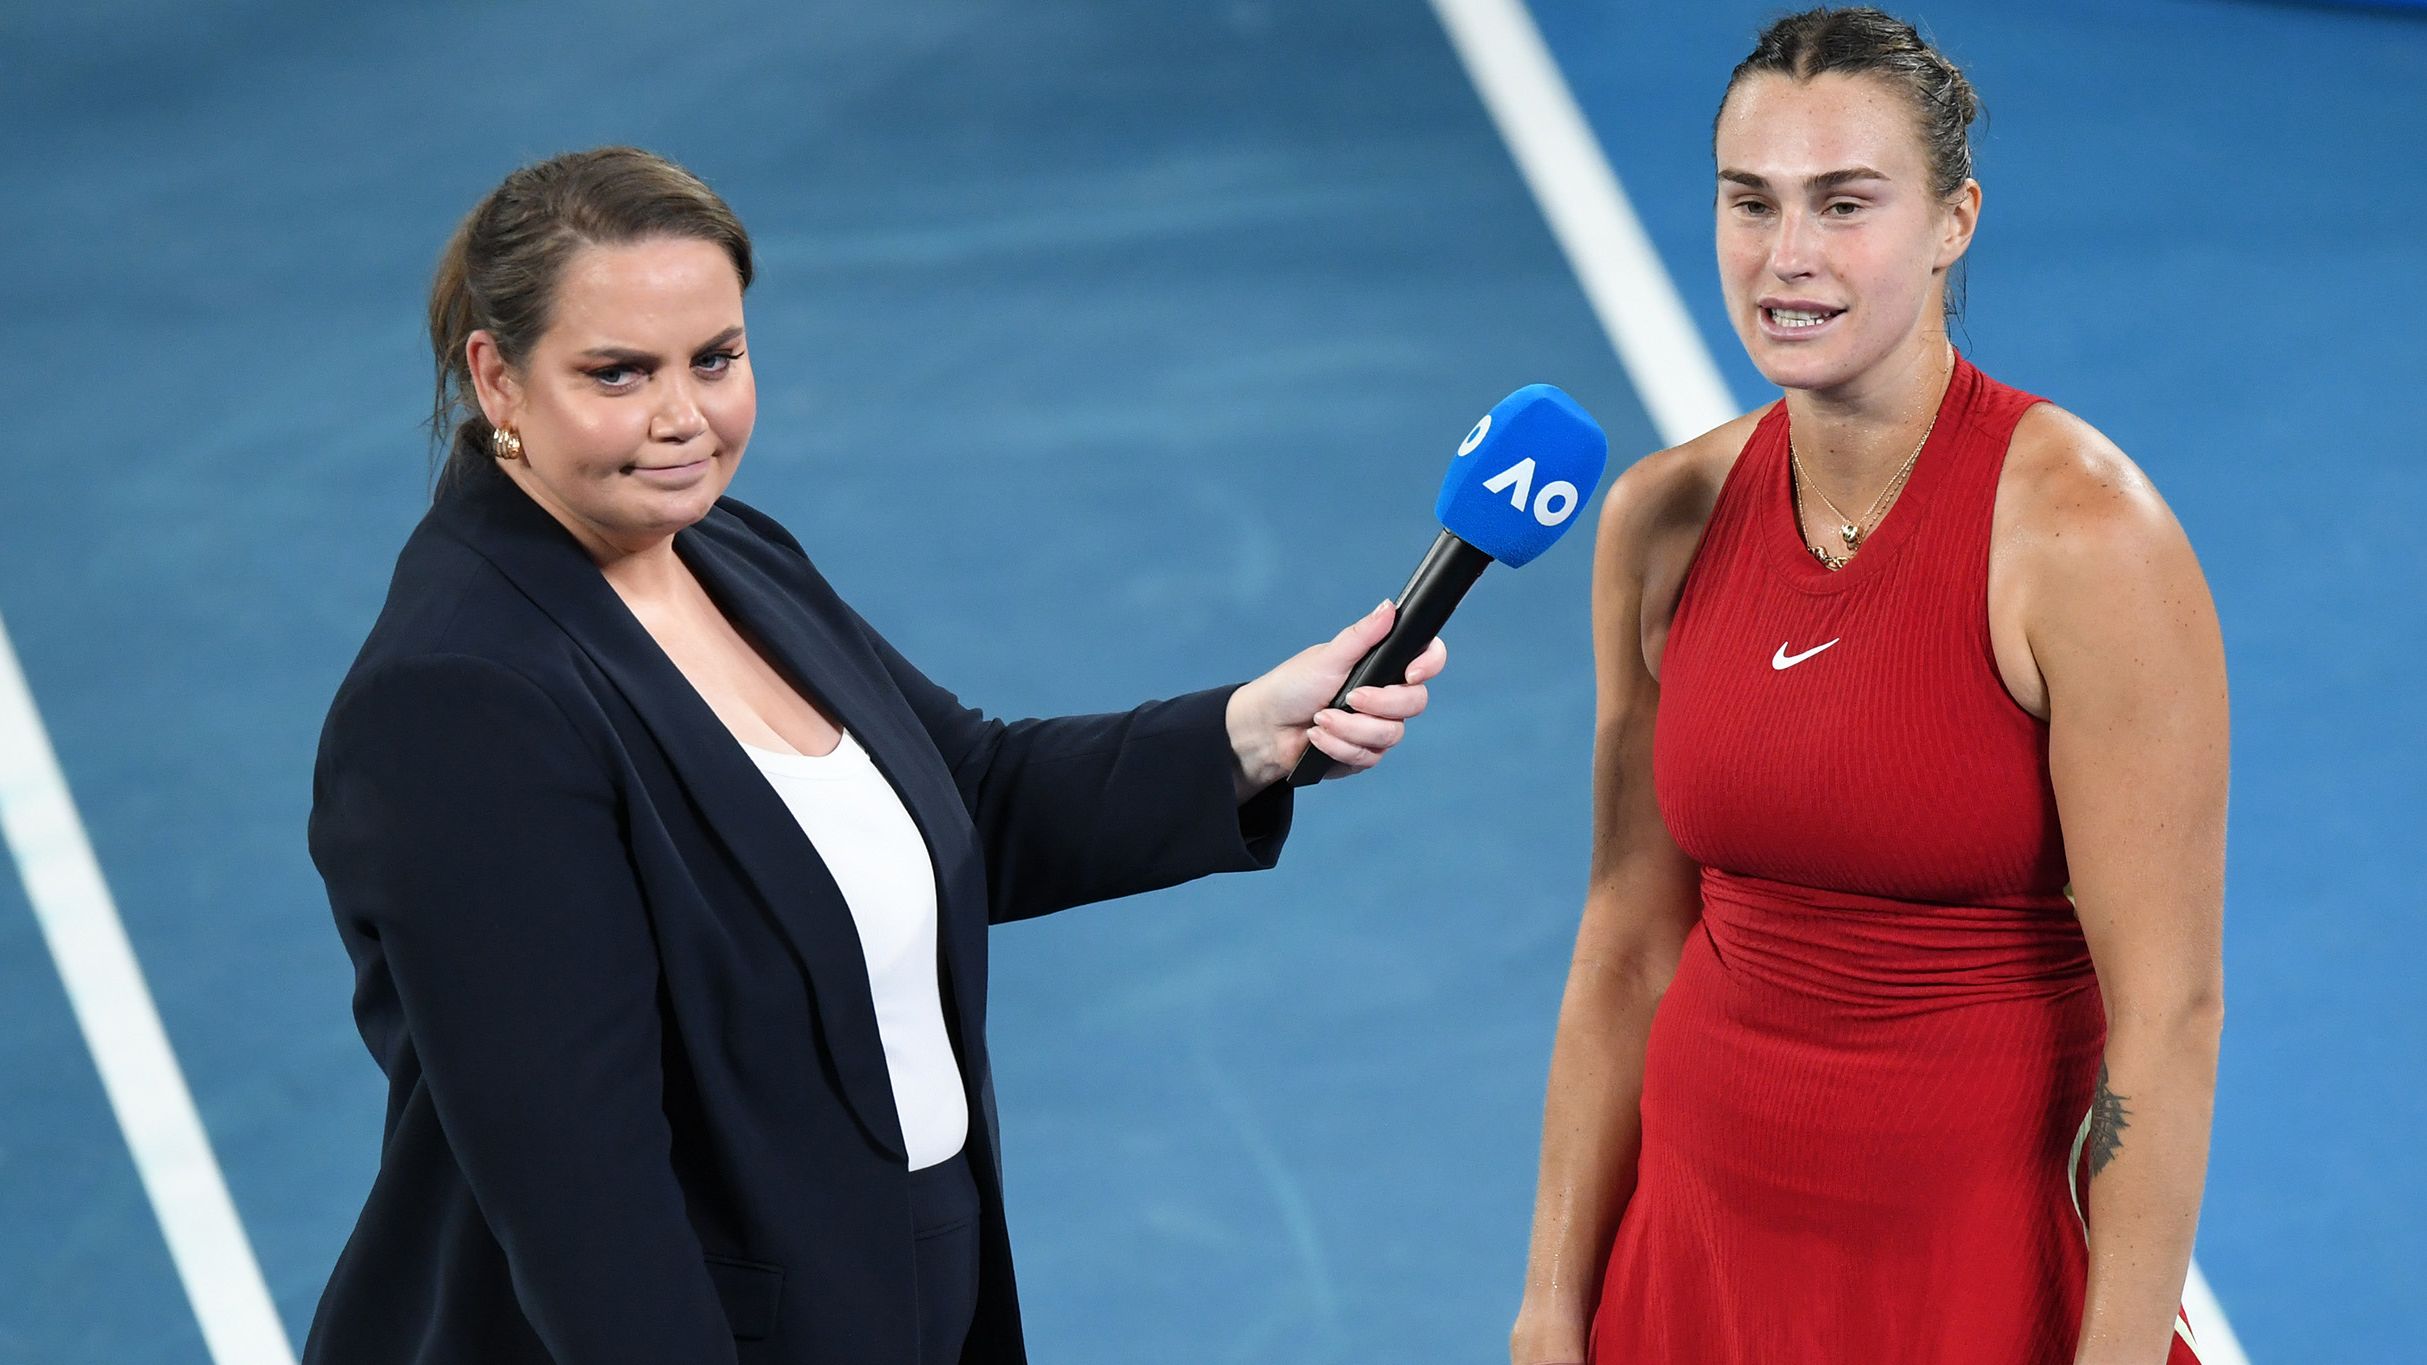 Jelena Dokic interviews Aryna Sabalenka after her win.